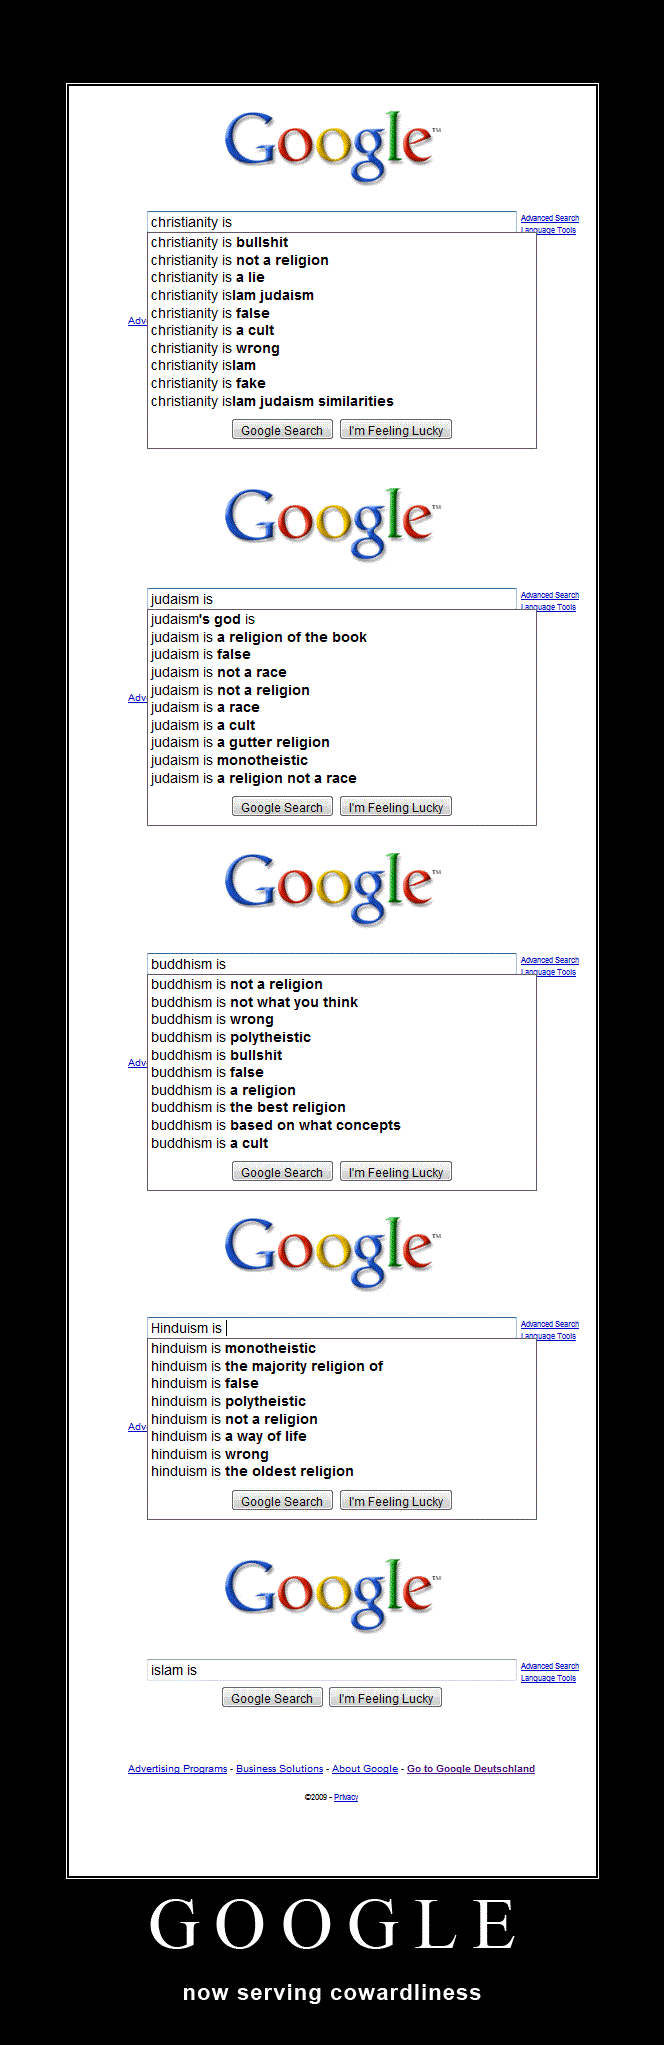 BL3Lo 1 - Google's 'Islam is' bug!